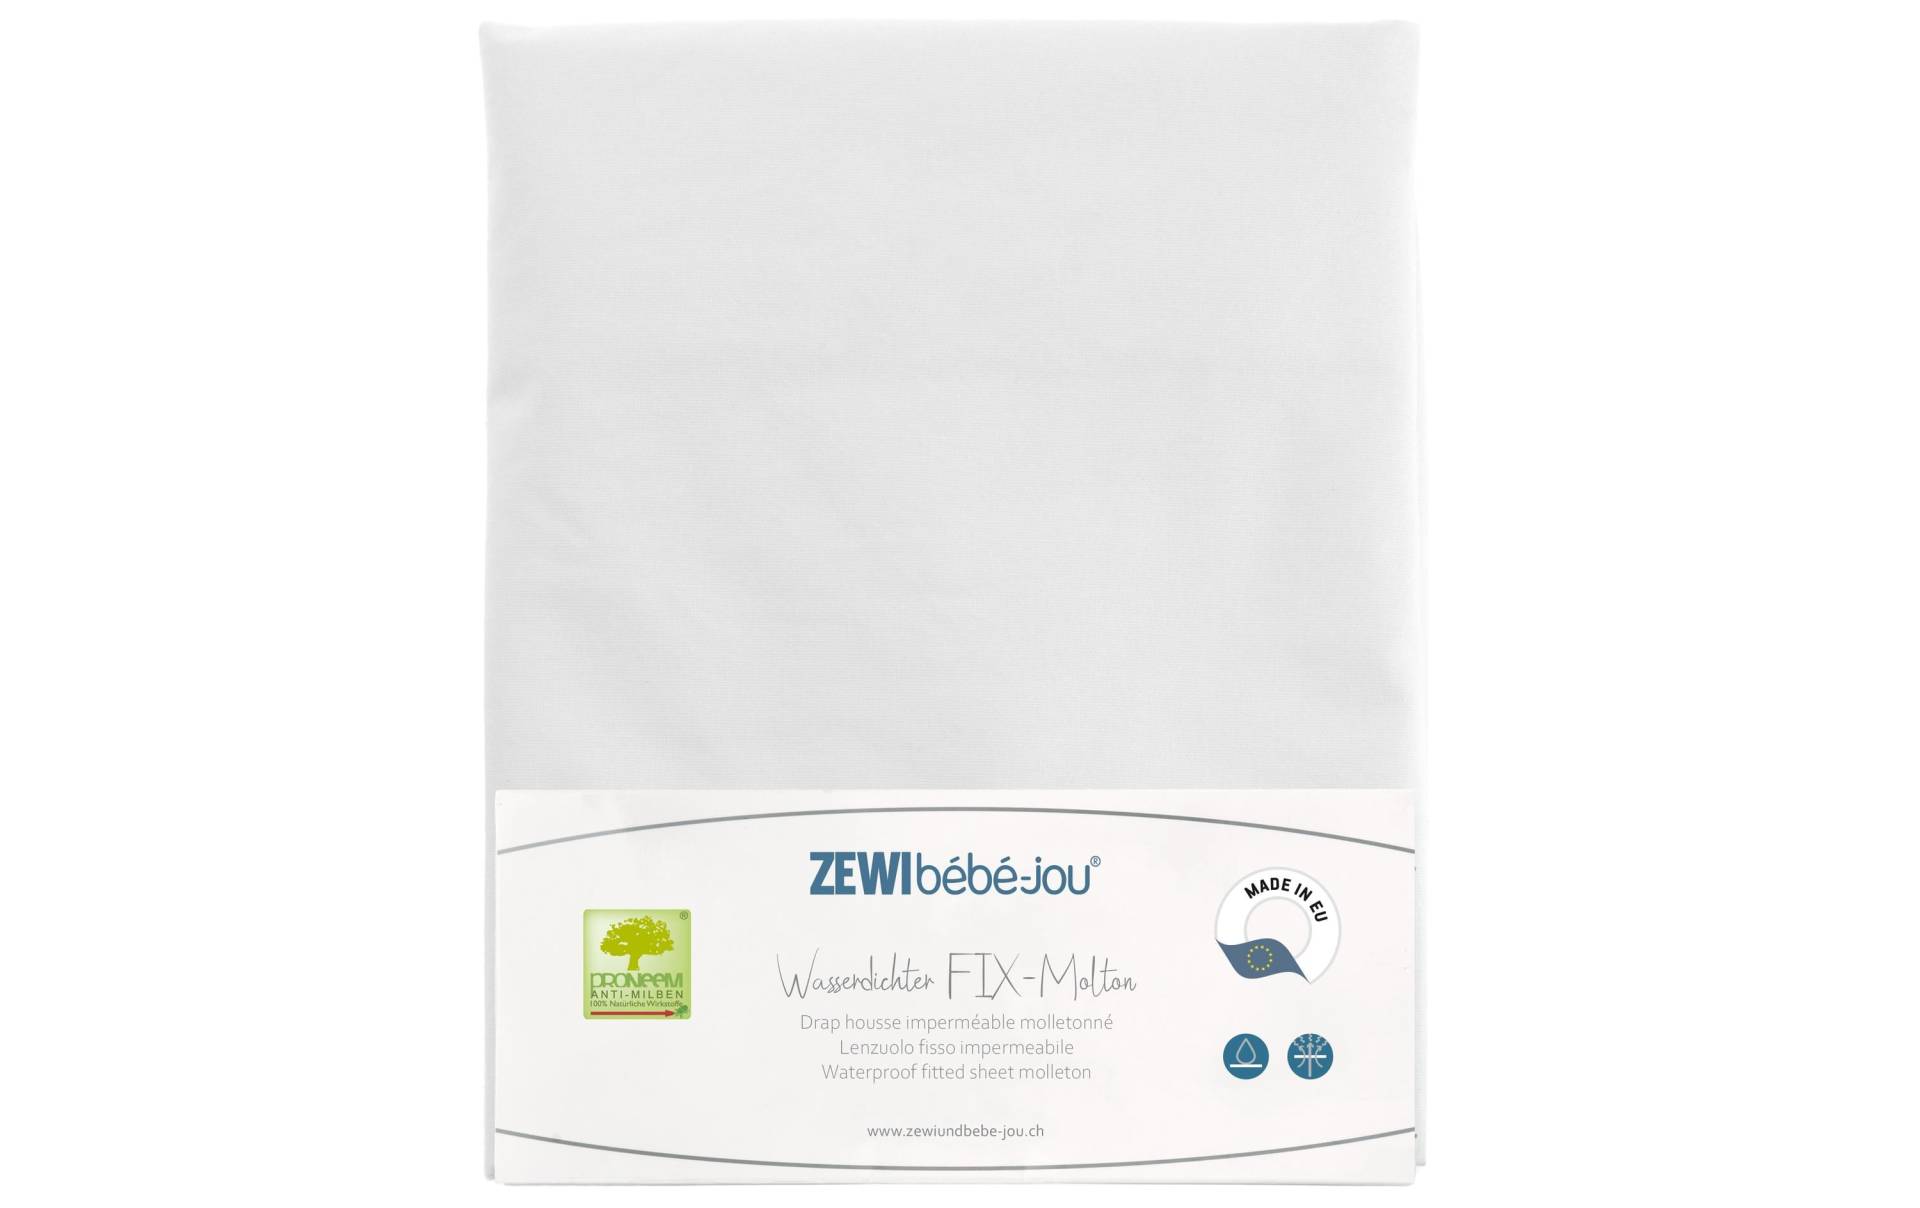 ZEWI bébé-jou Matratzenschutzbezug »Wasserdichter Fix-Mol« von ZEWI bébé-jou